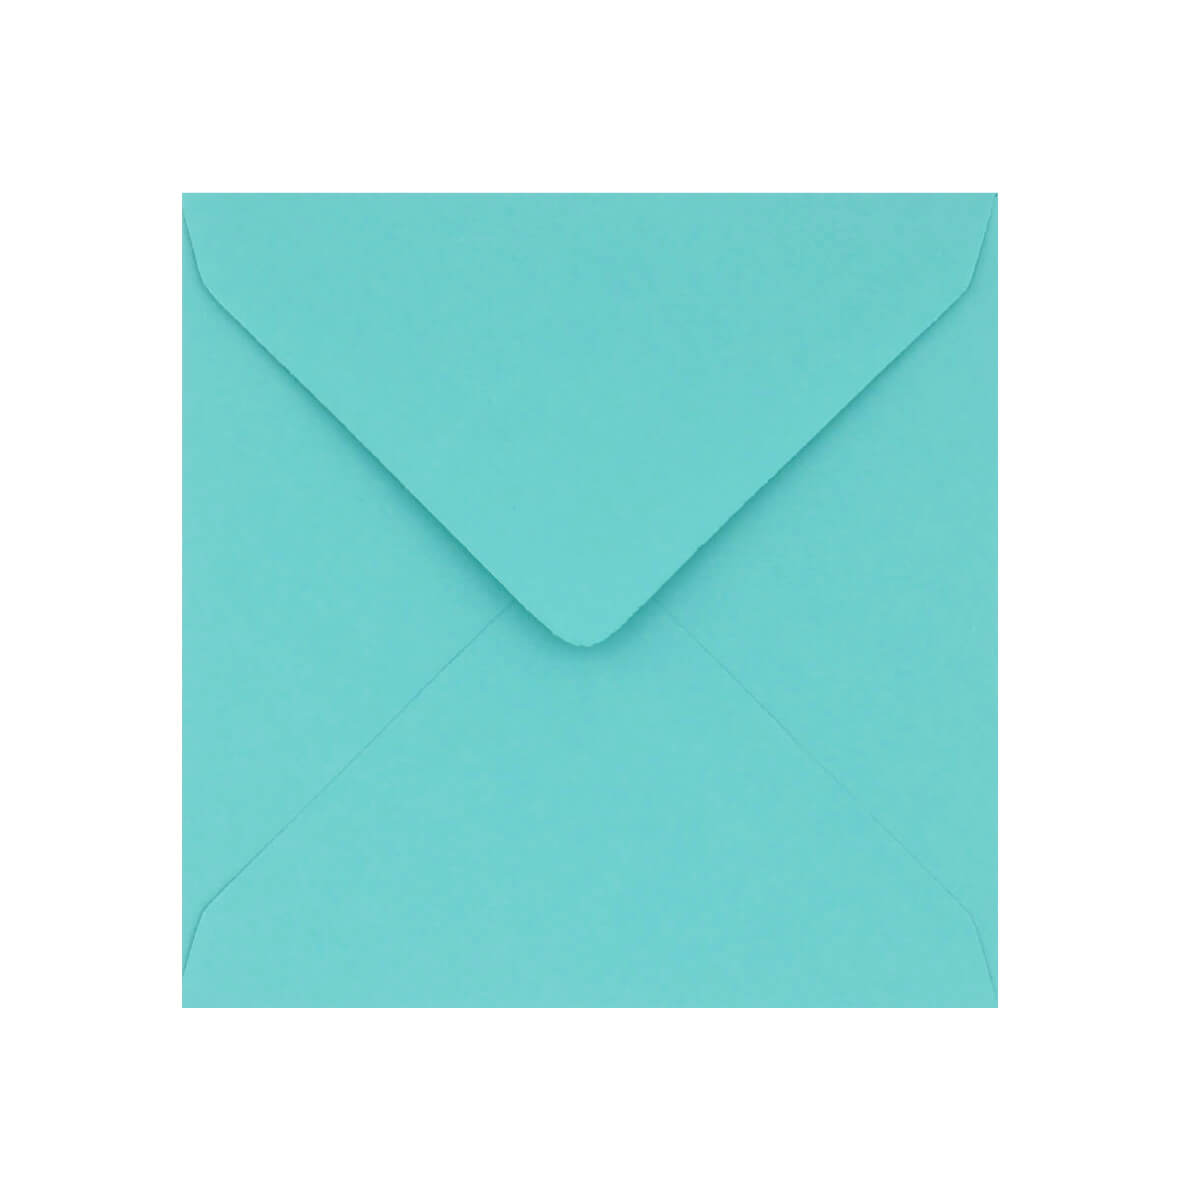 Robin jajce Modra 130mm kvadratne kuverte 120gsm